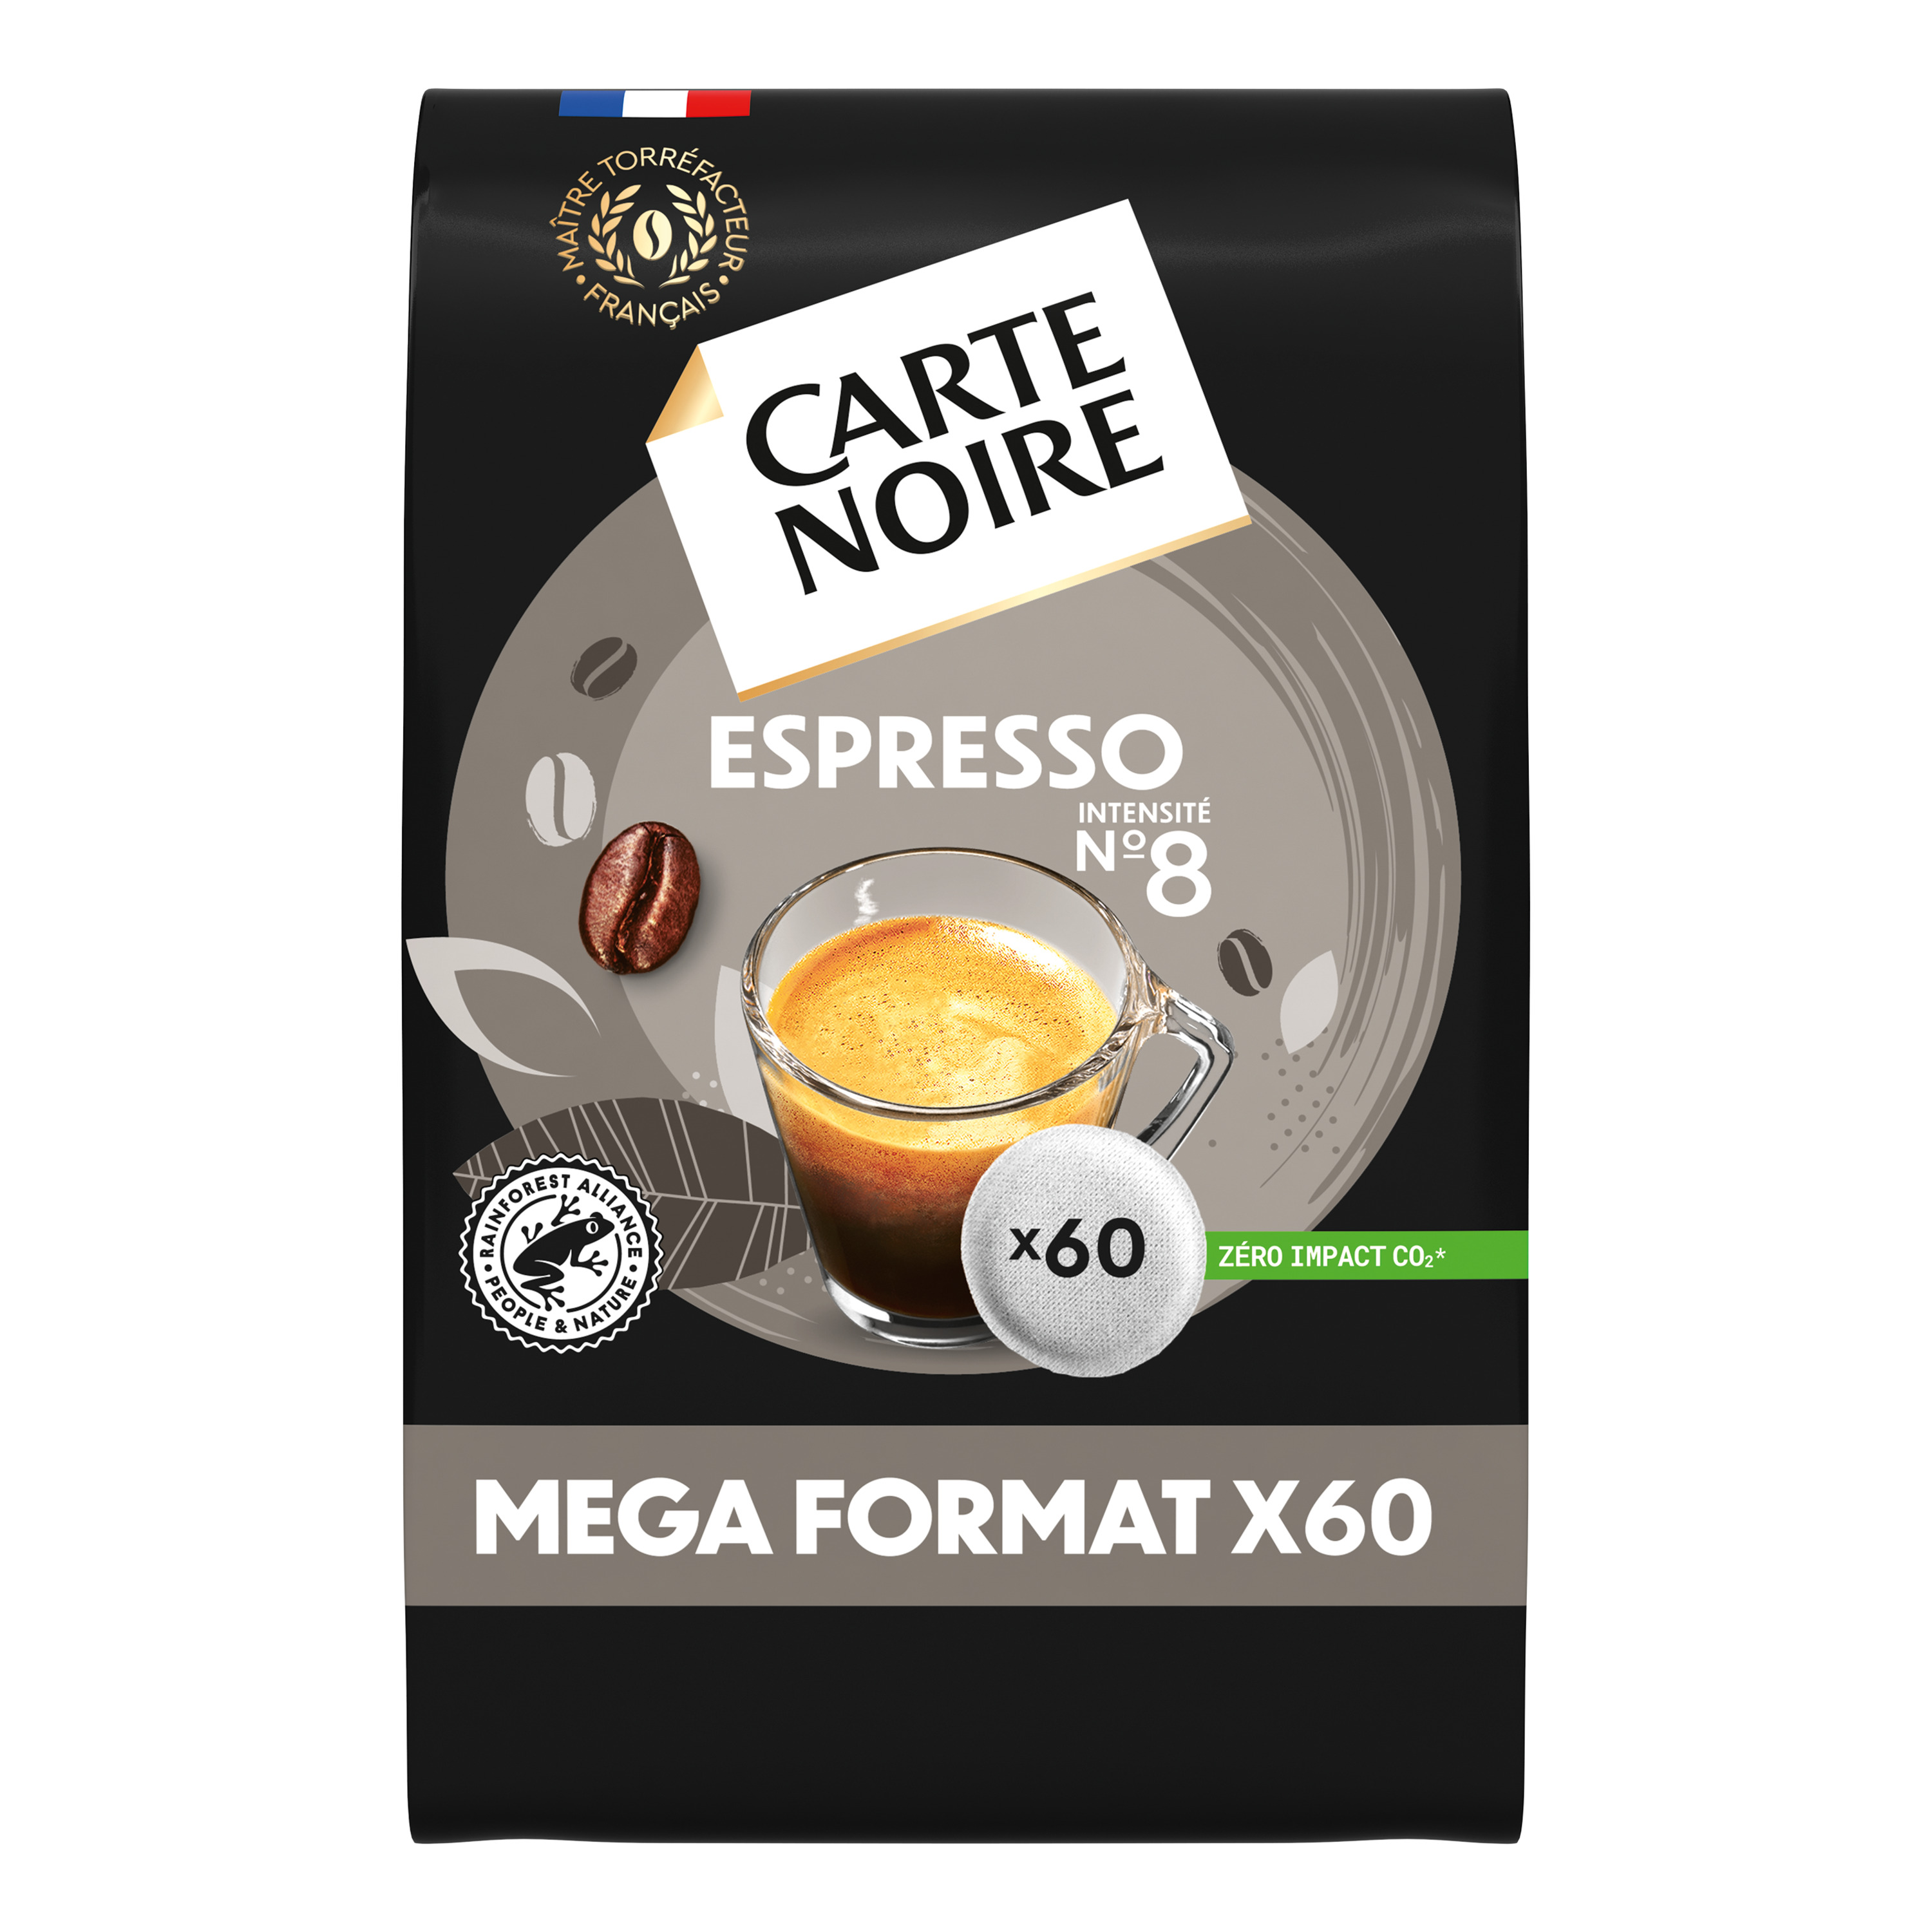 TASSIMO Dosettes de café espresso classique L'Or 2x16 dosettes